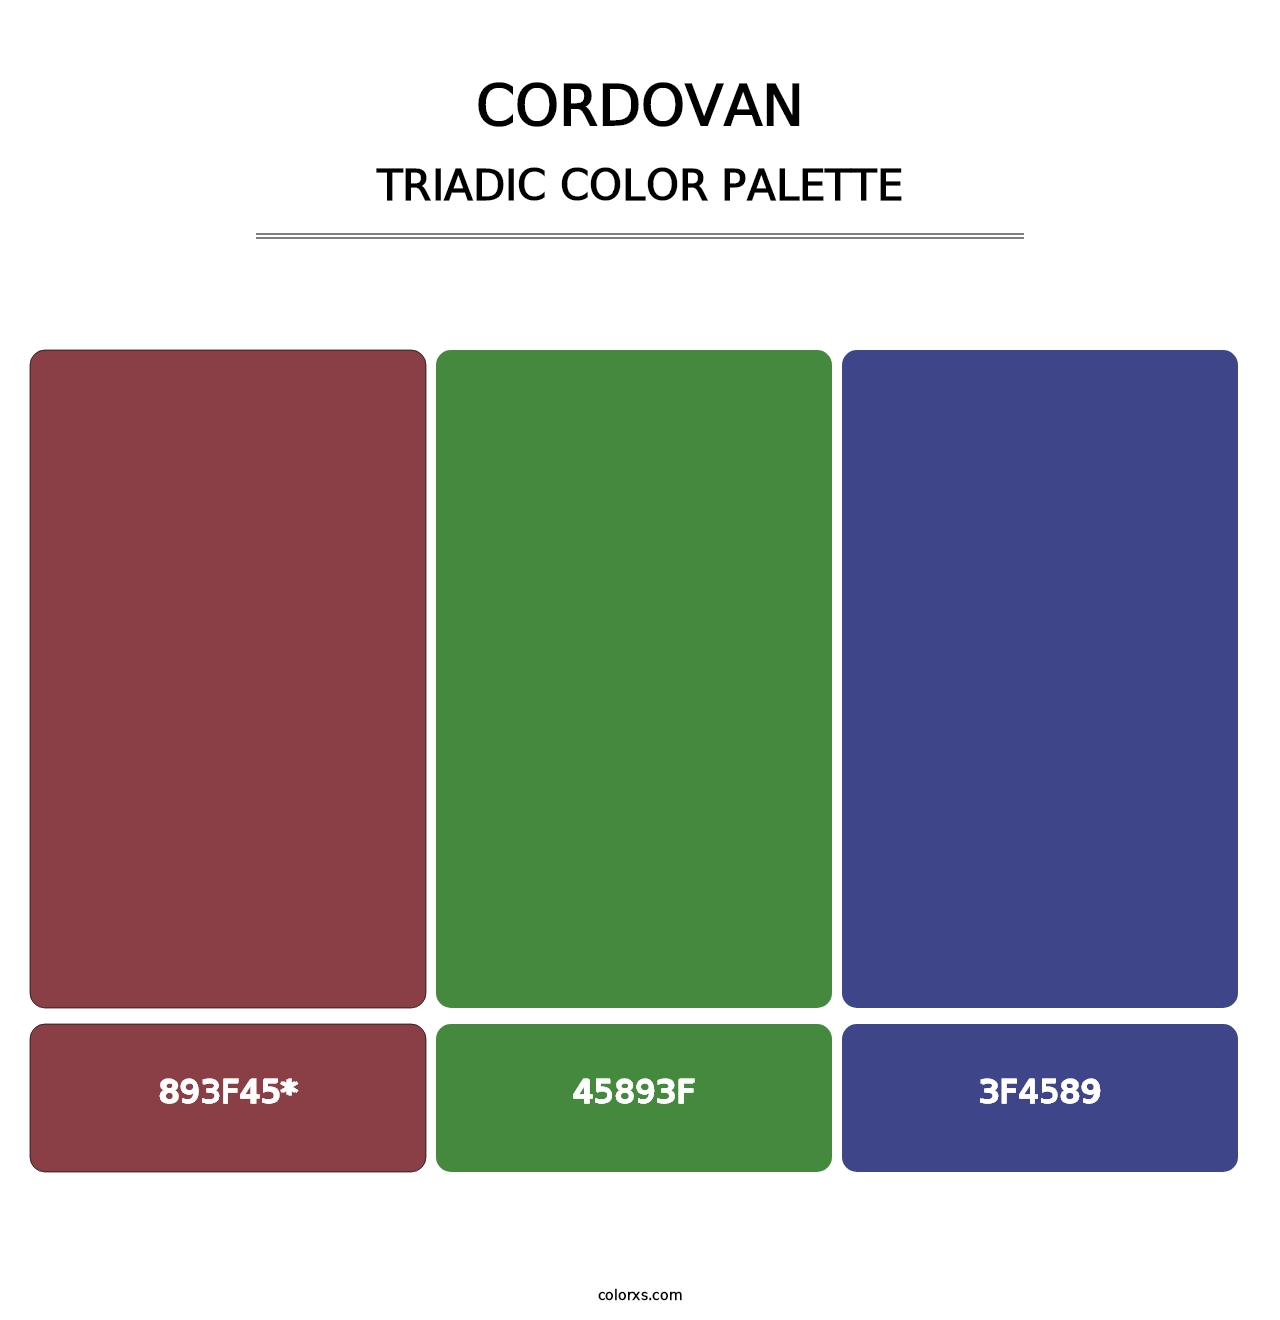 Cordovan - Triadic Color Palette